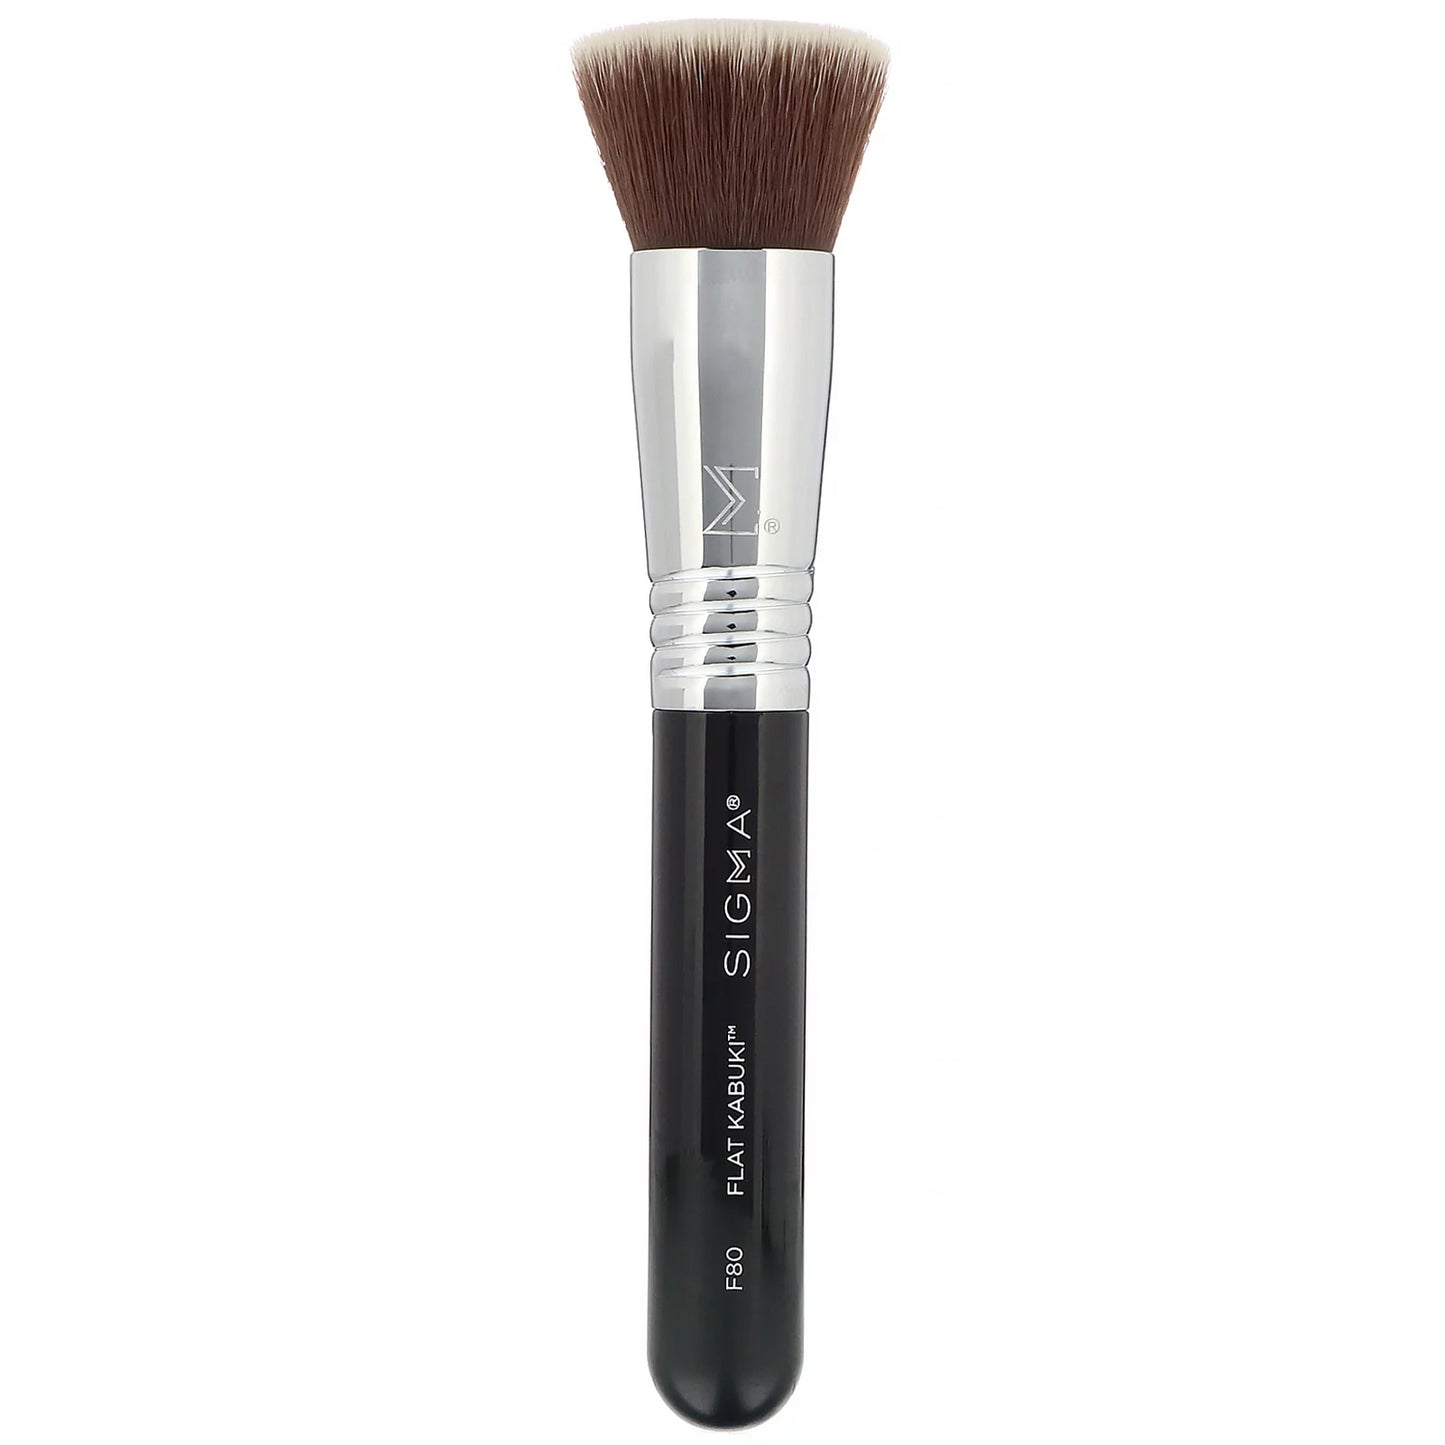 Sigma F80 Flat Kabuki make-up brush